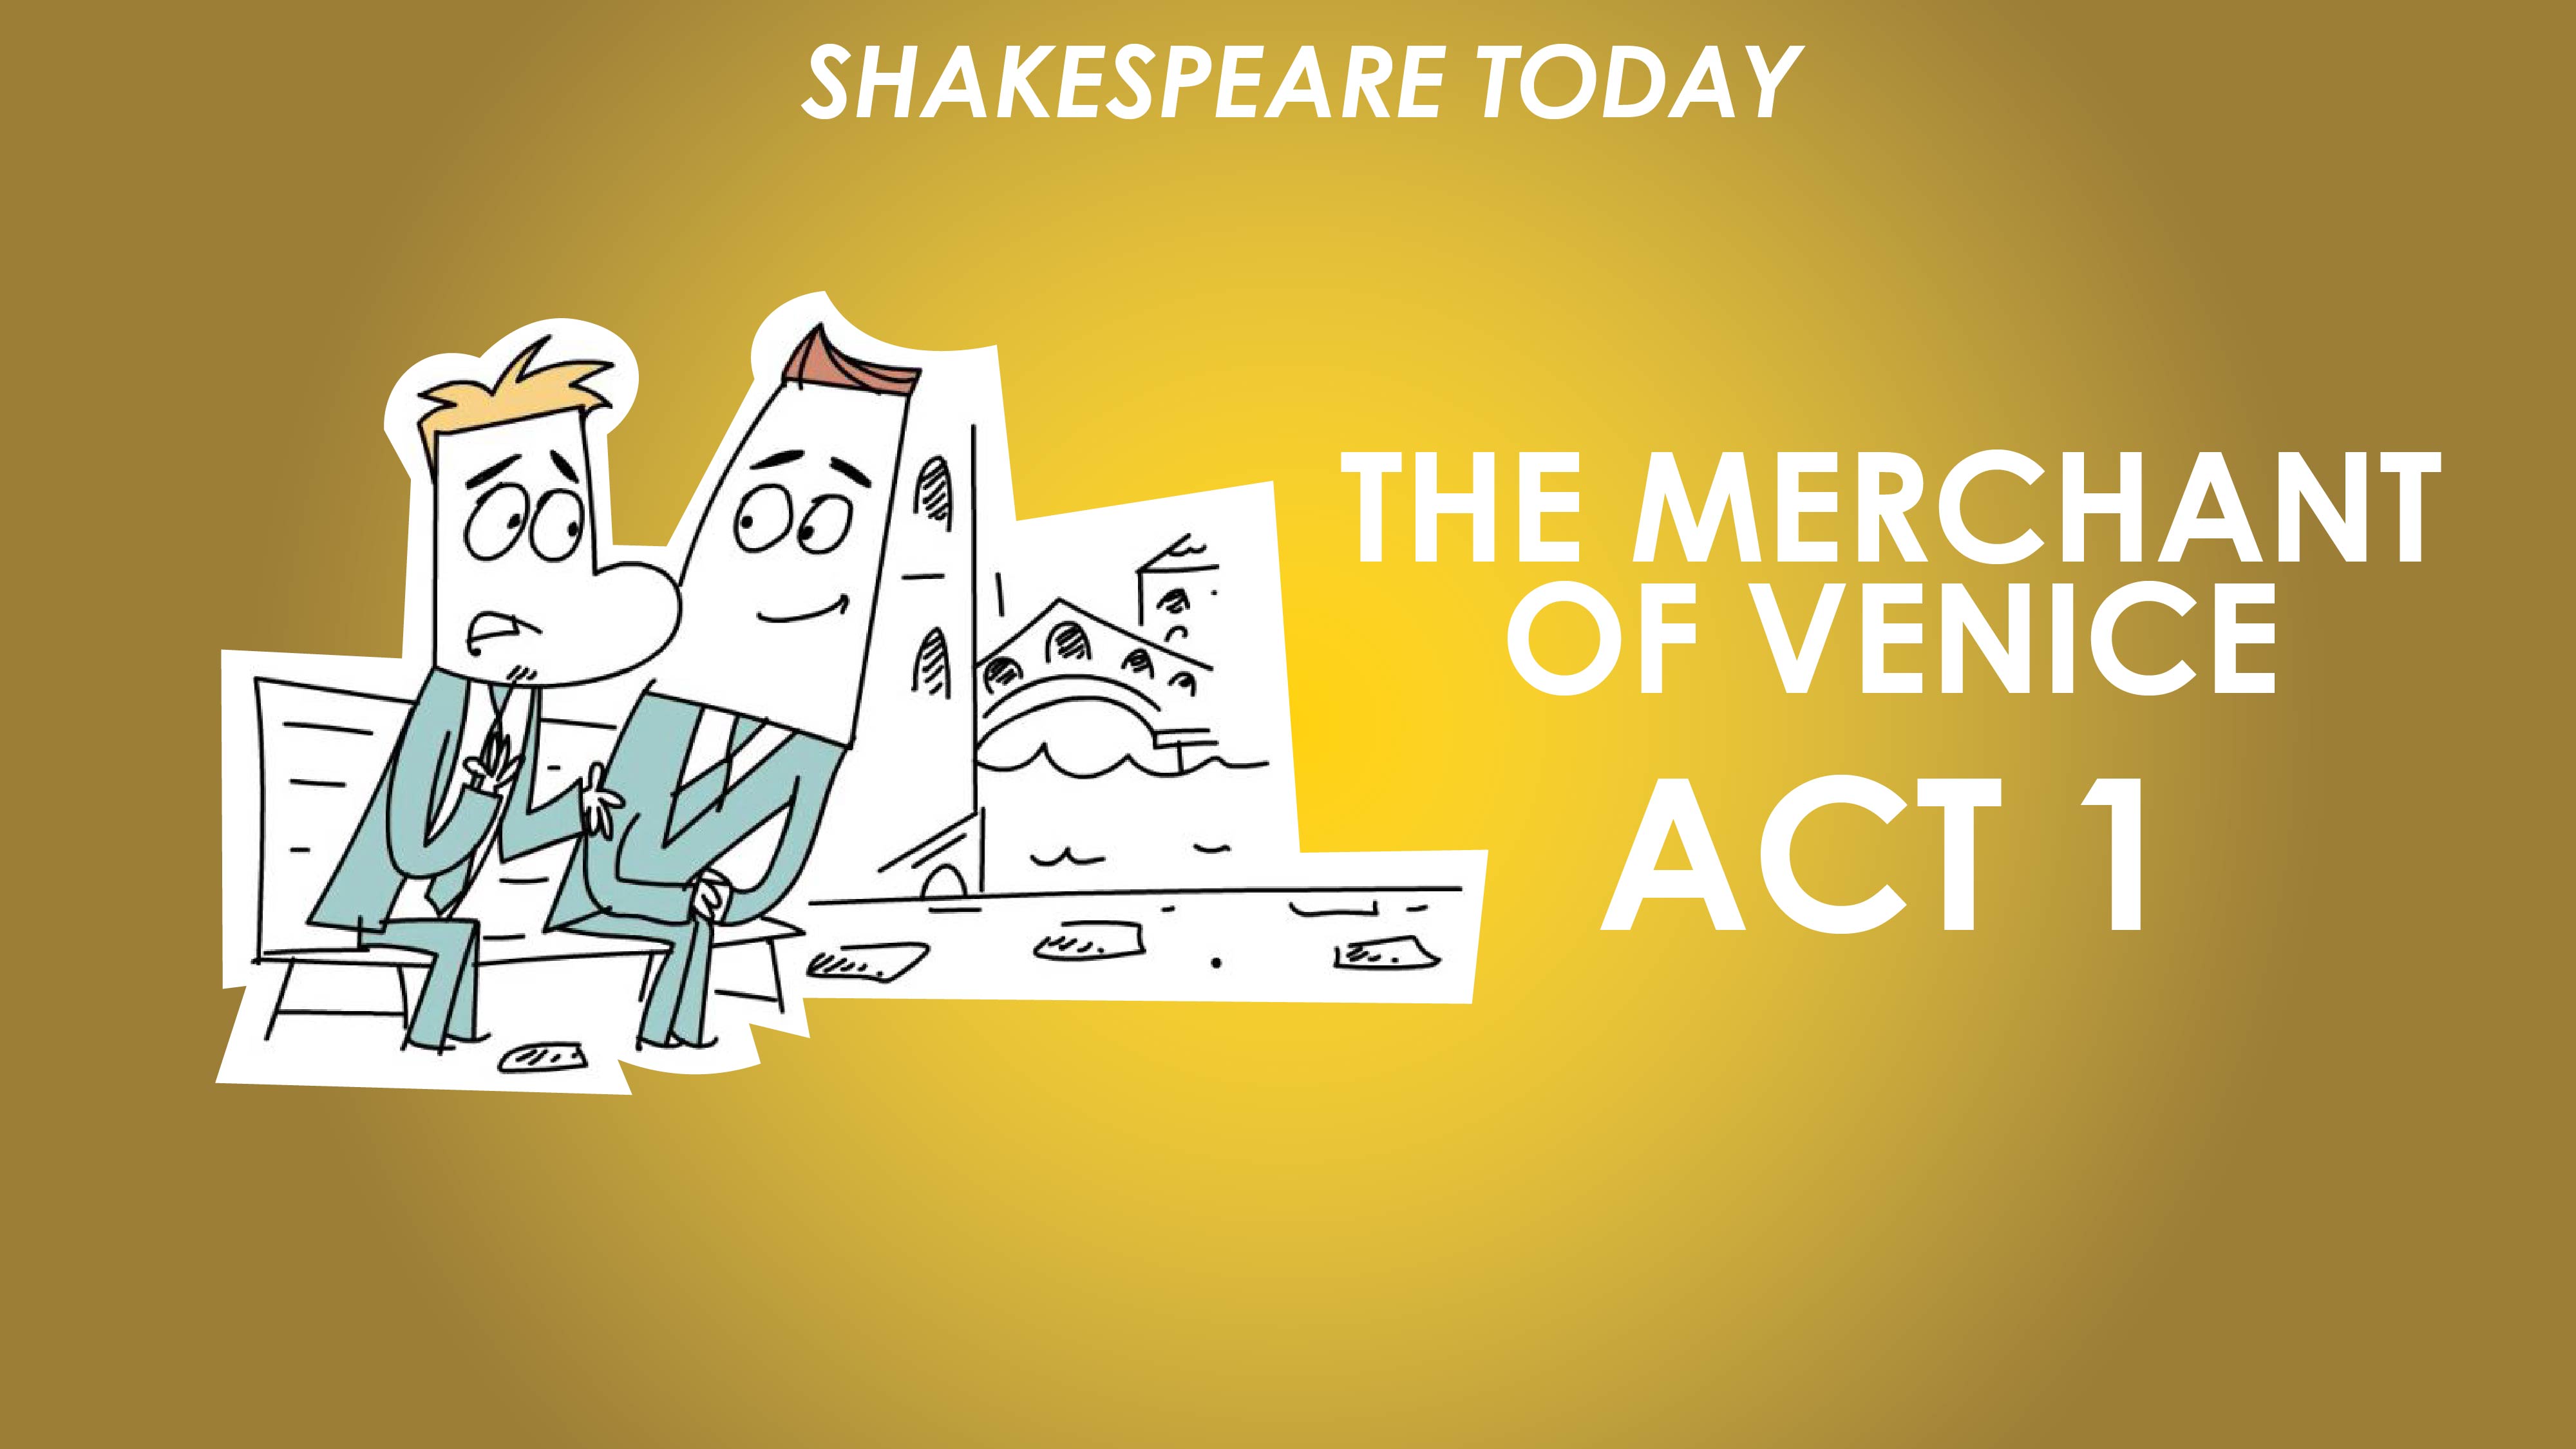 The Merchant of Venice Act 1 Summary - Shakespeare Today Series